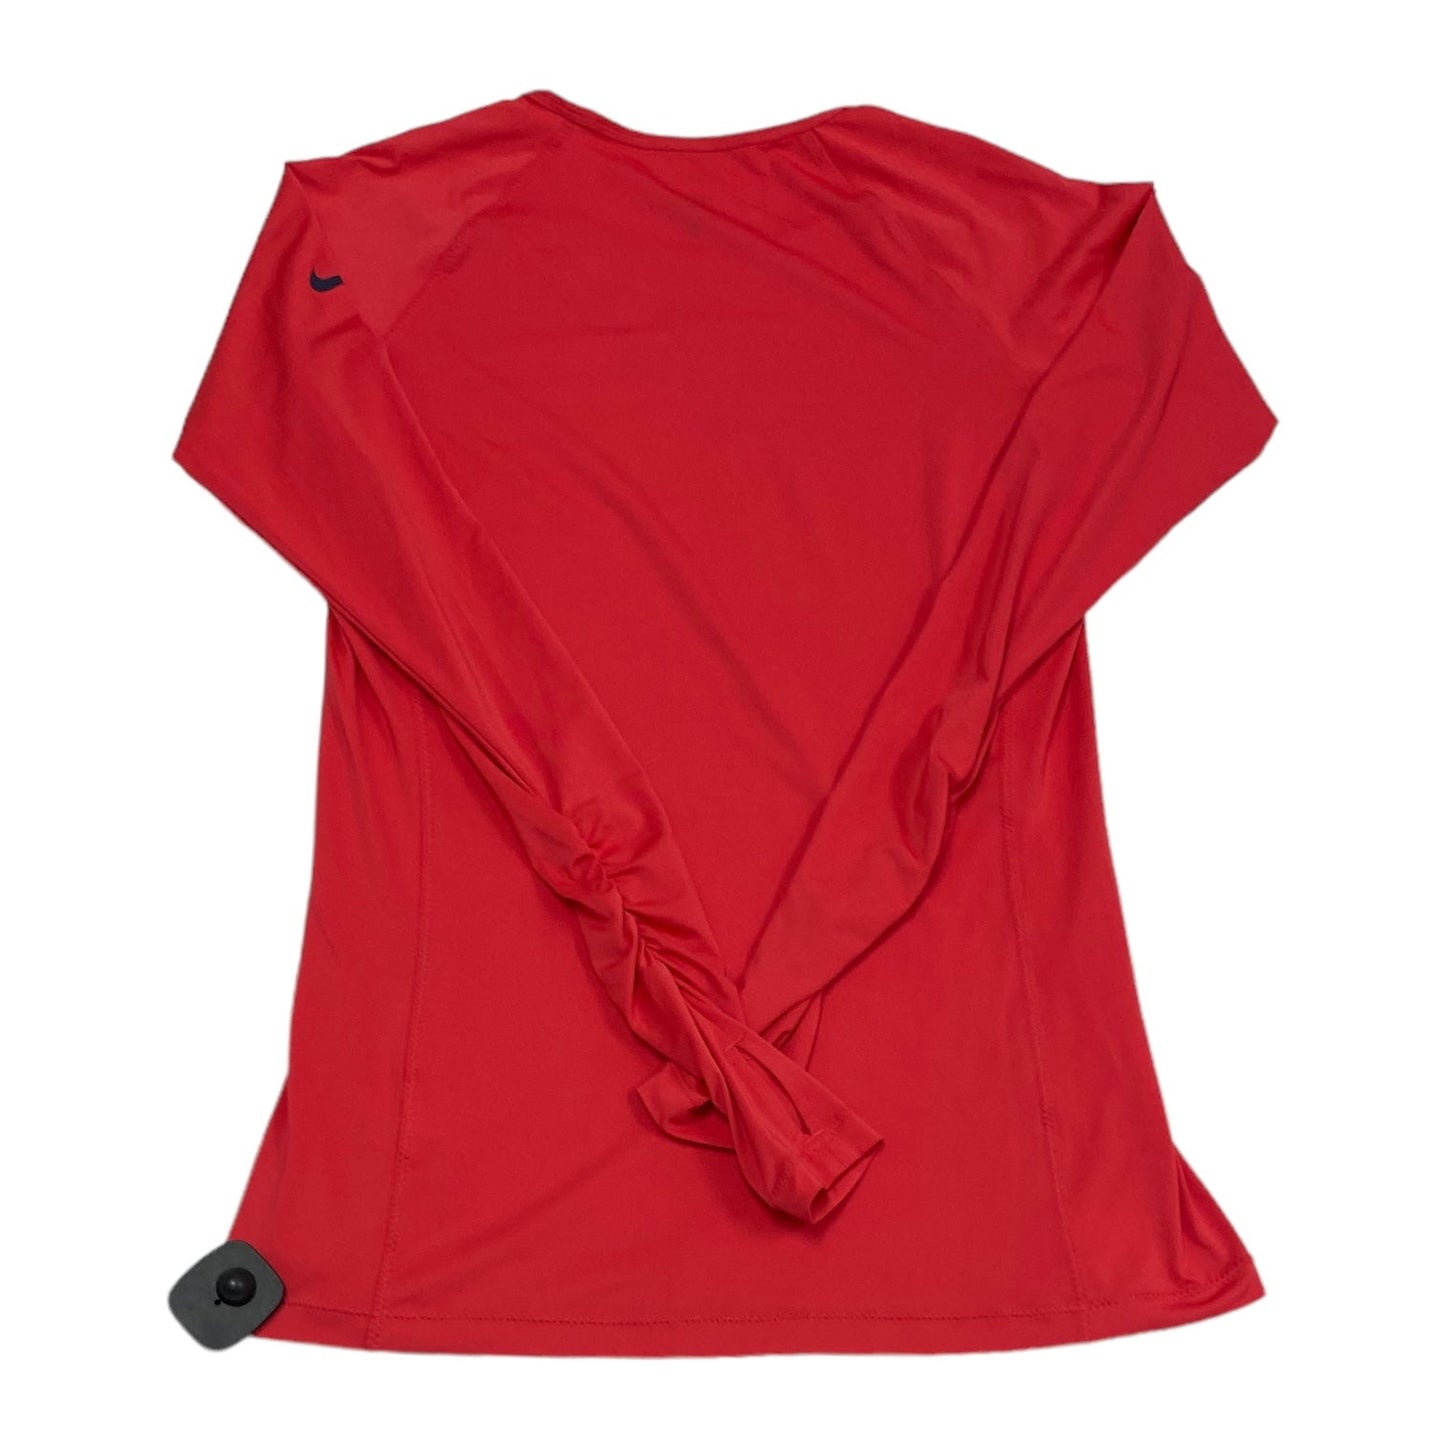 Orange Athletic Top Long Sleeve Crewneck Nike, Size L